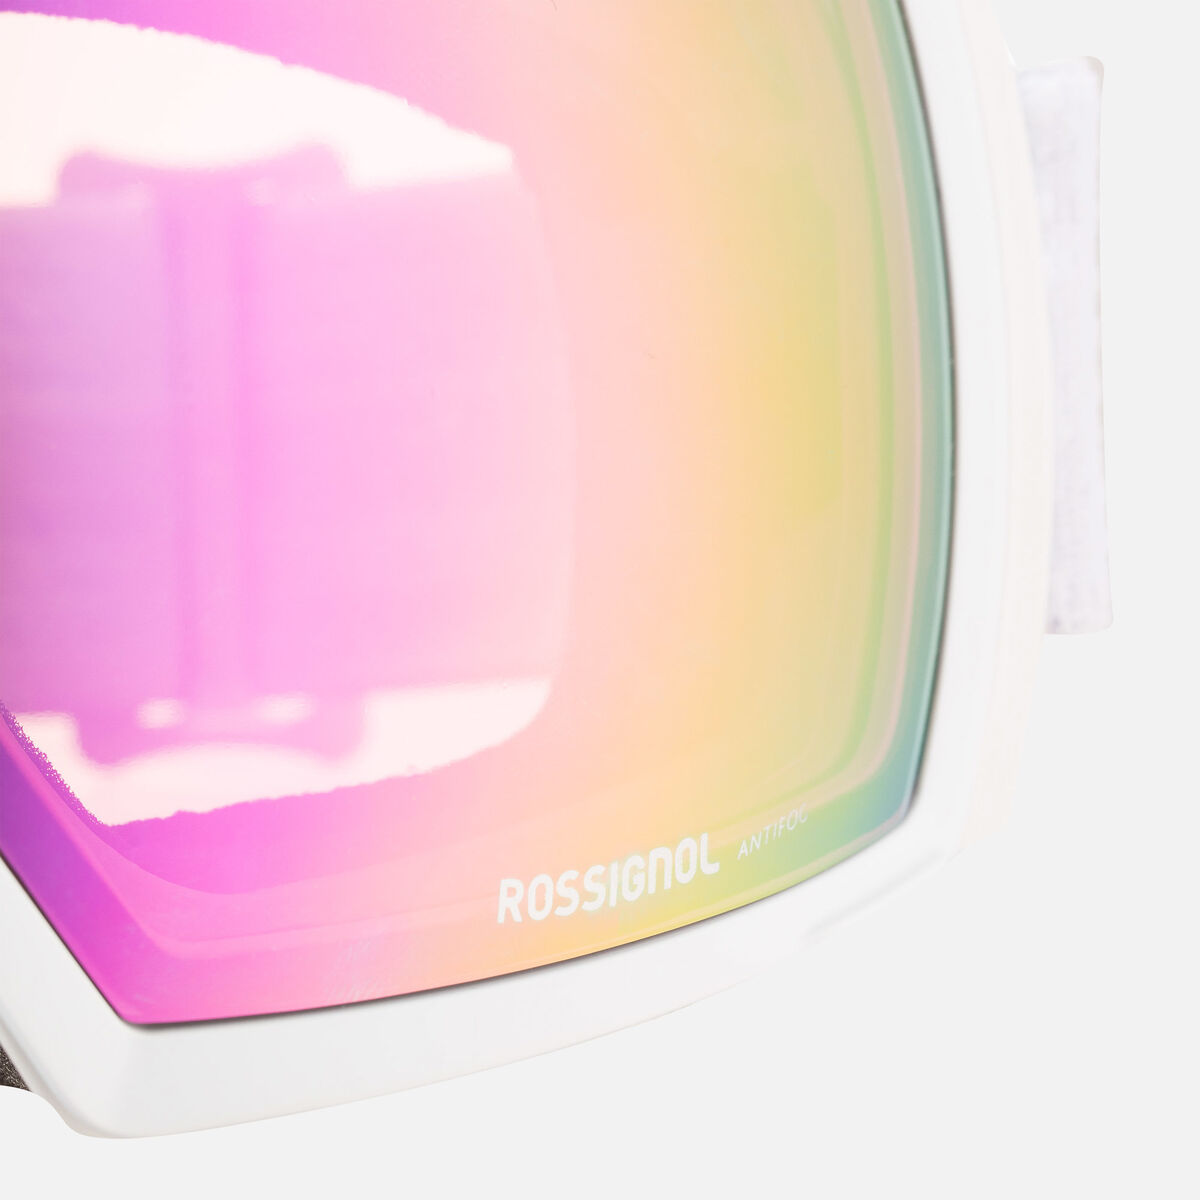 Gafas Magne'lens para mujer, Gafas de esquí Mujer